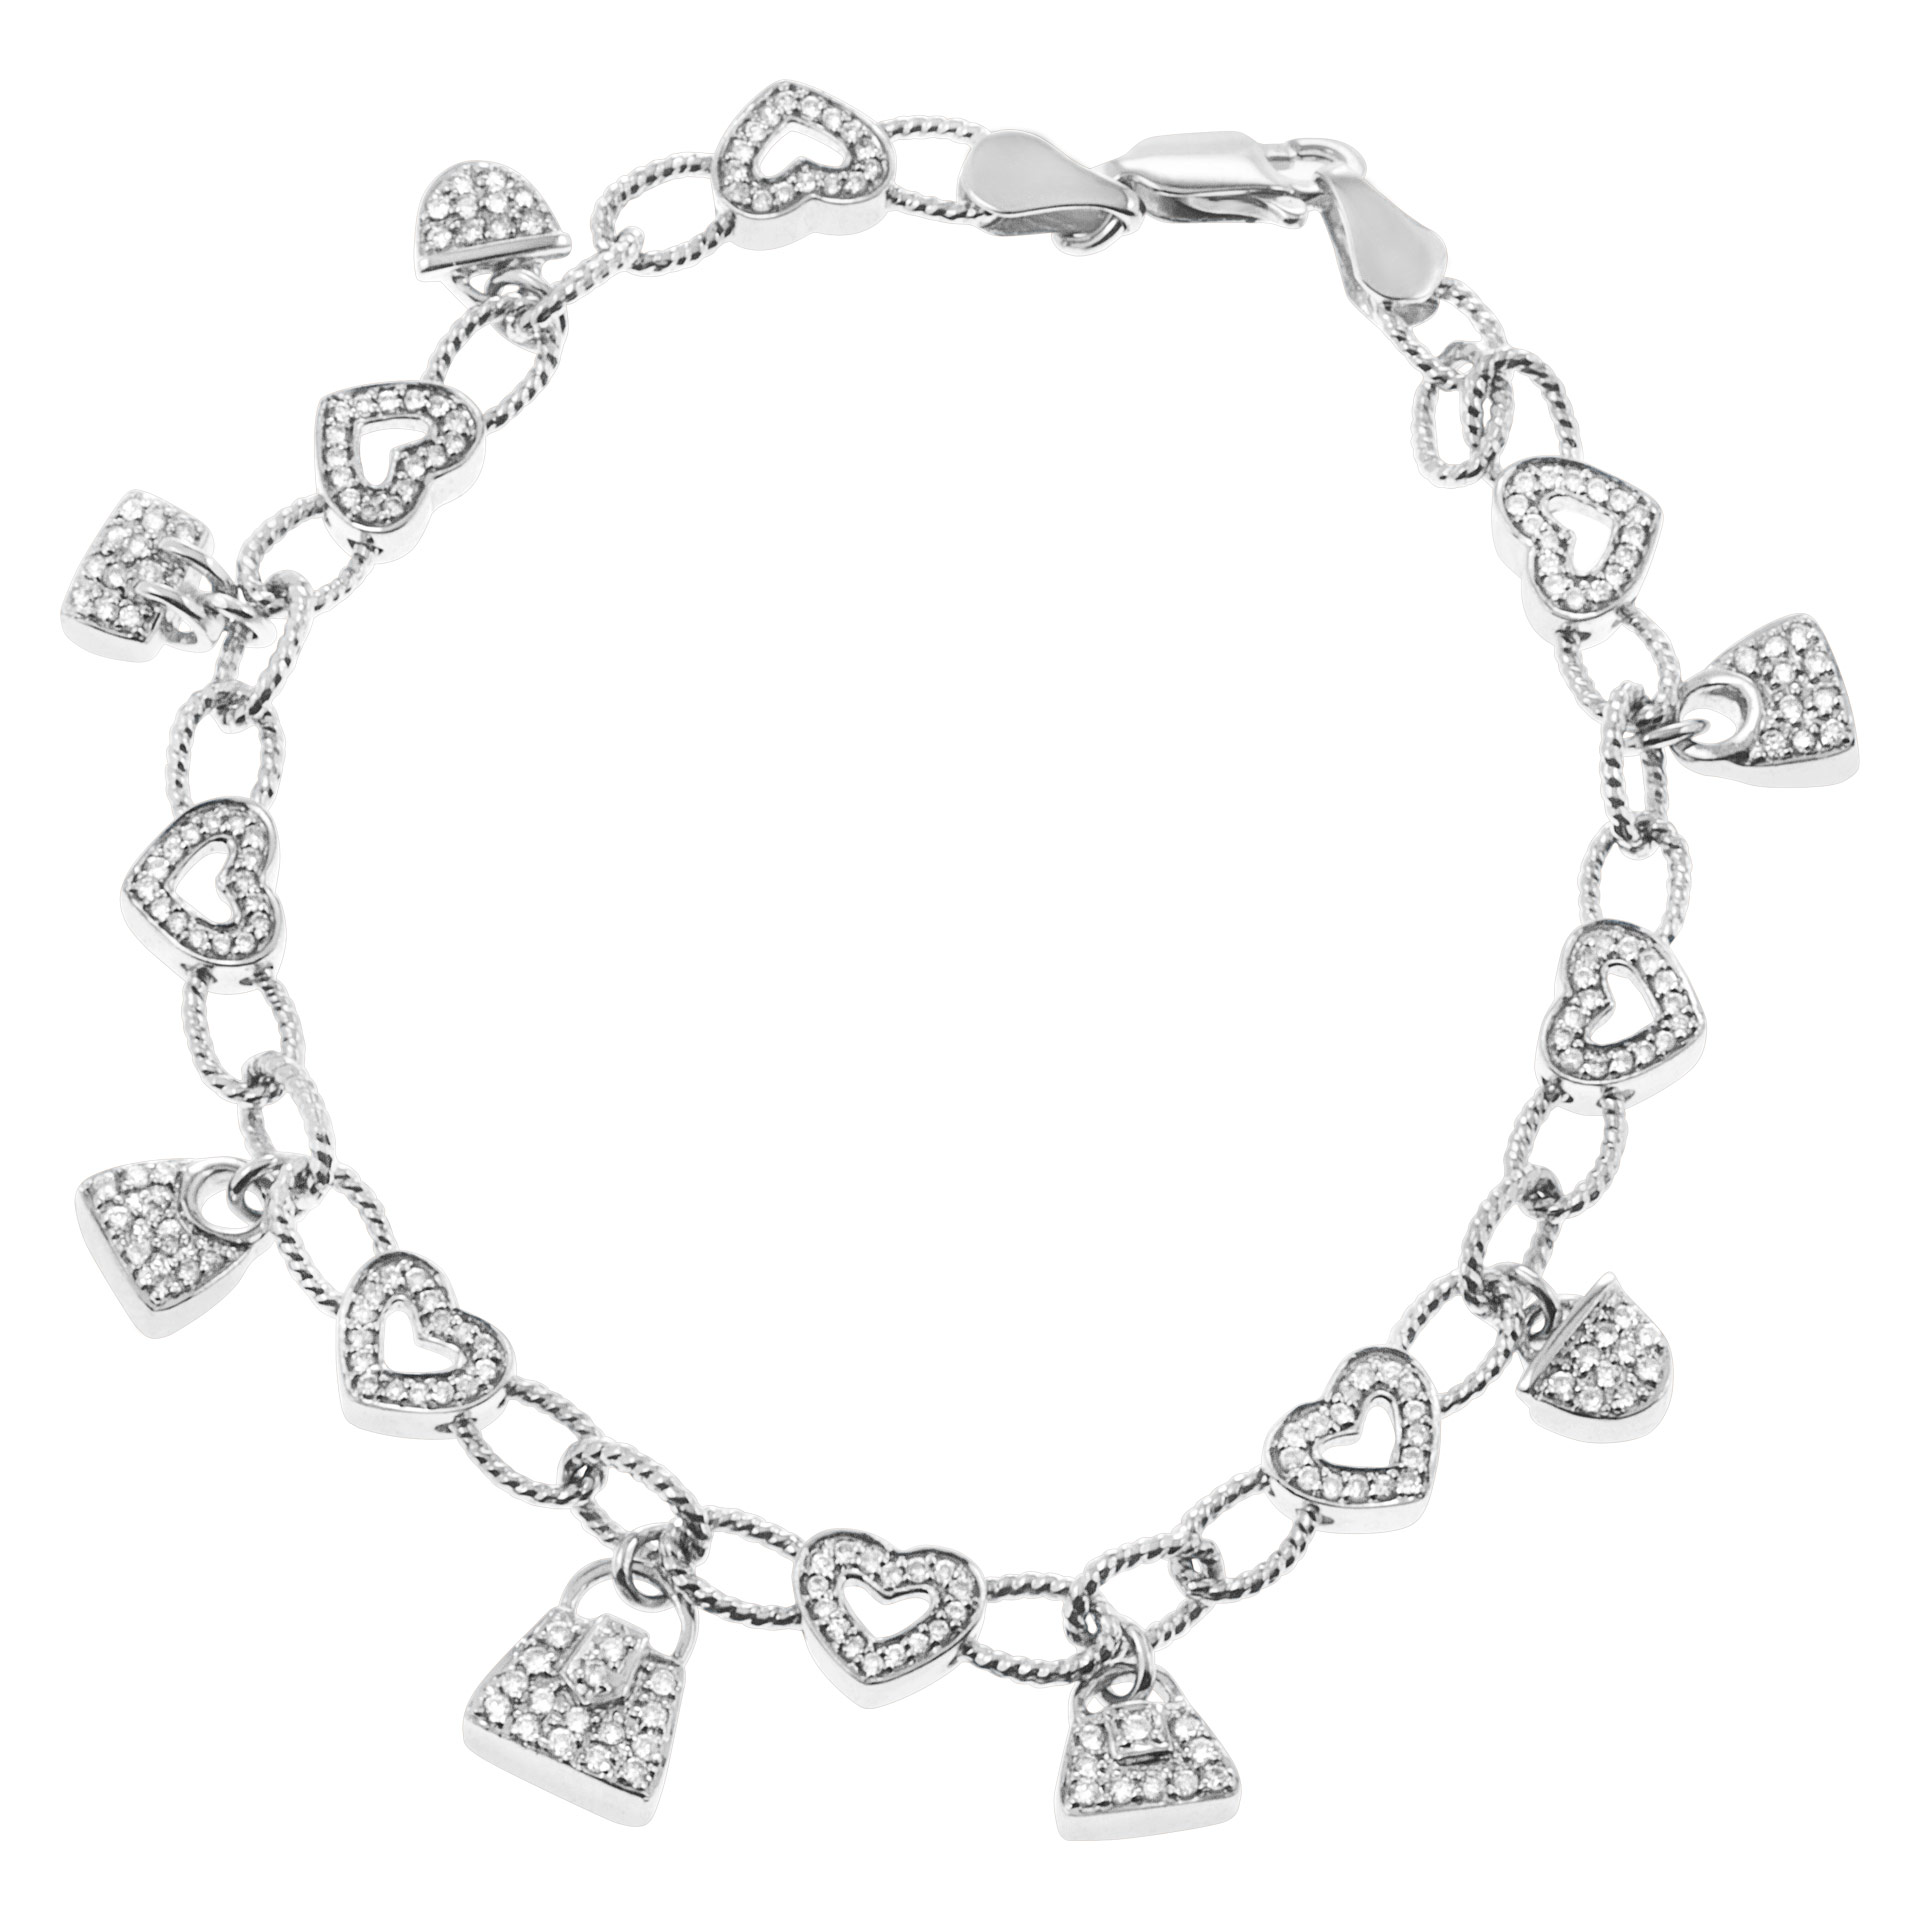 Breathtaking diamond bracelet with sweet diamond hearts and bags